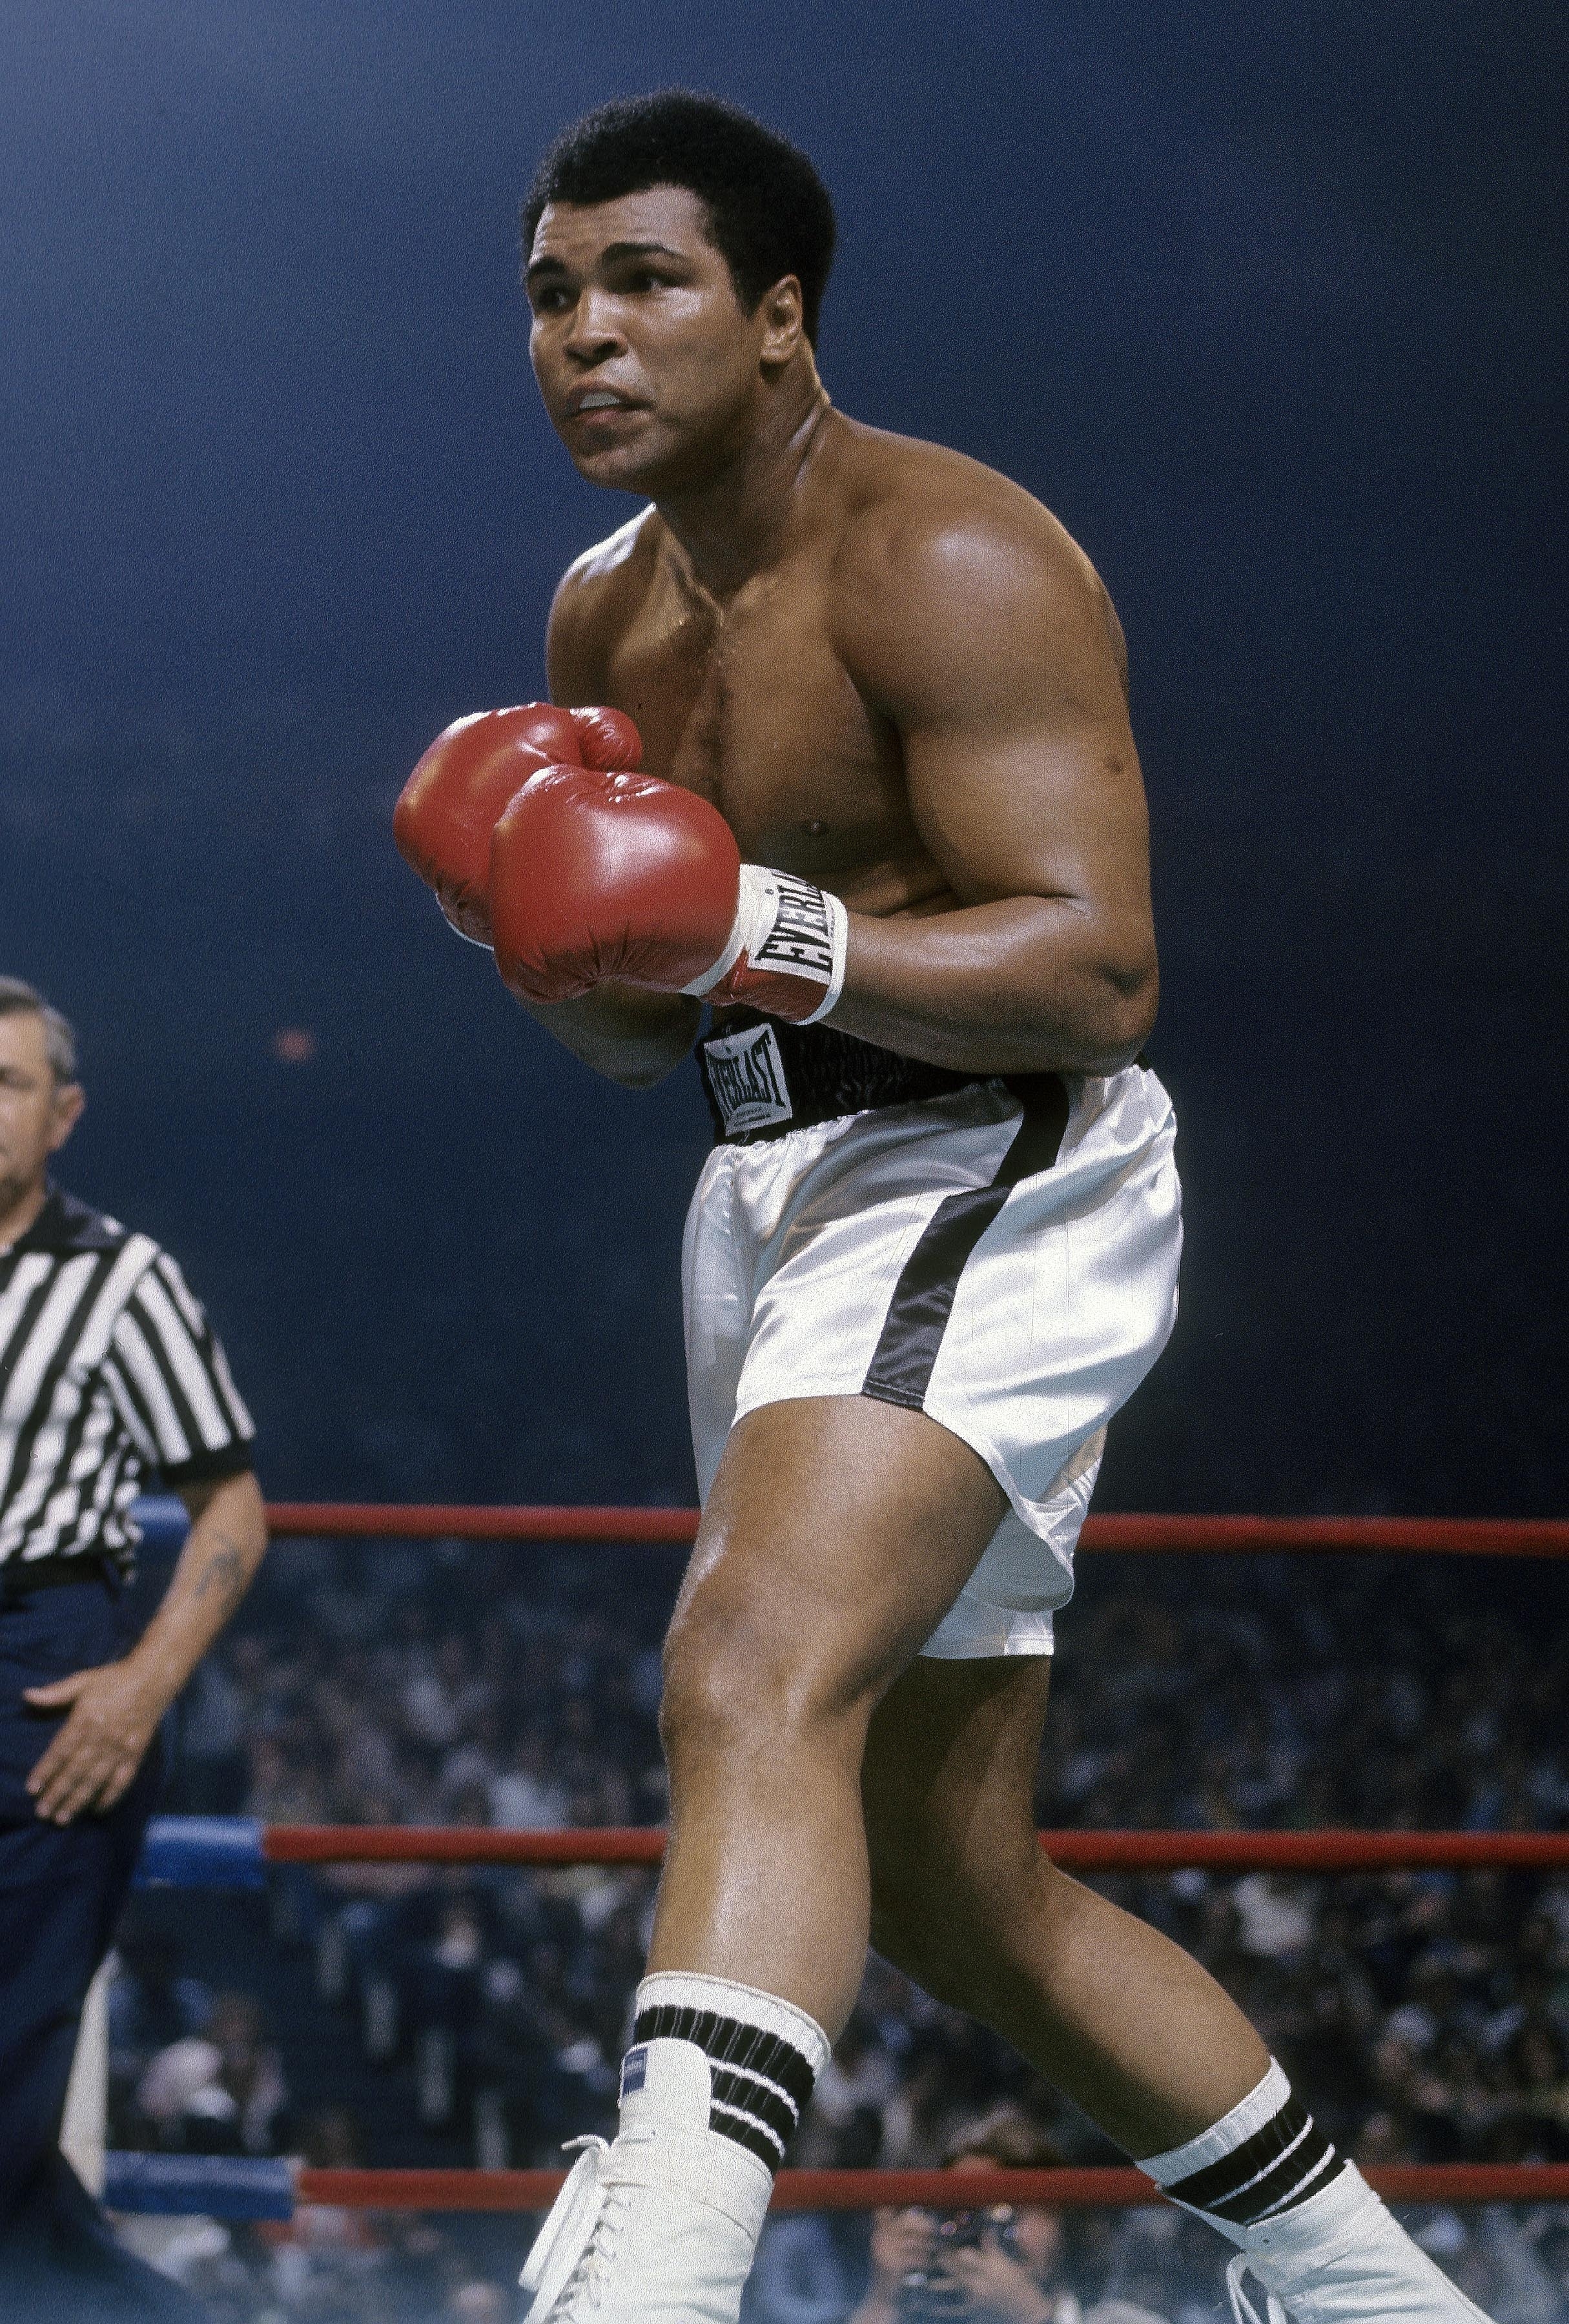 Muhammad Ali in the ring